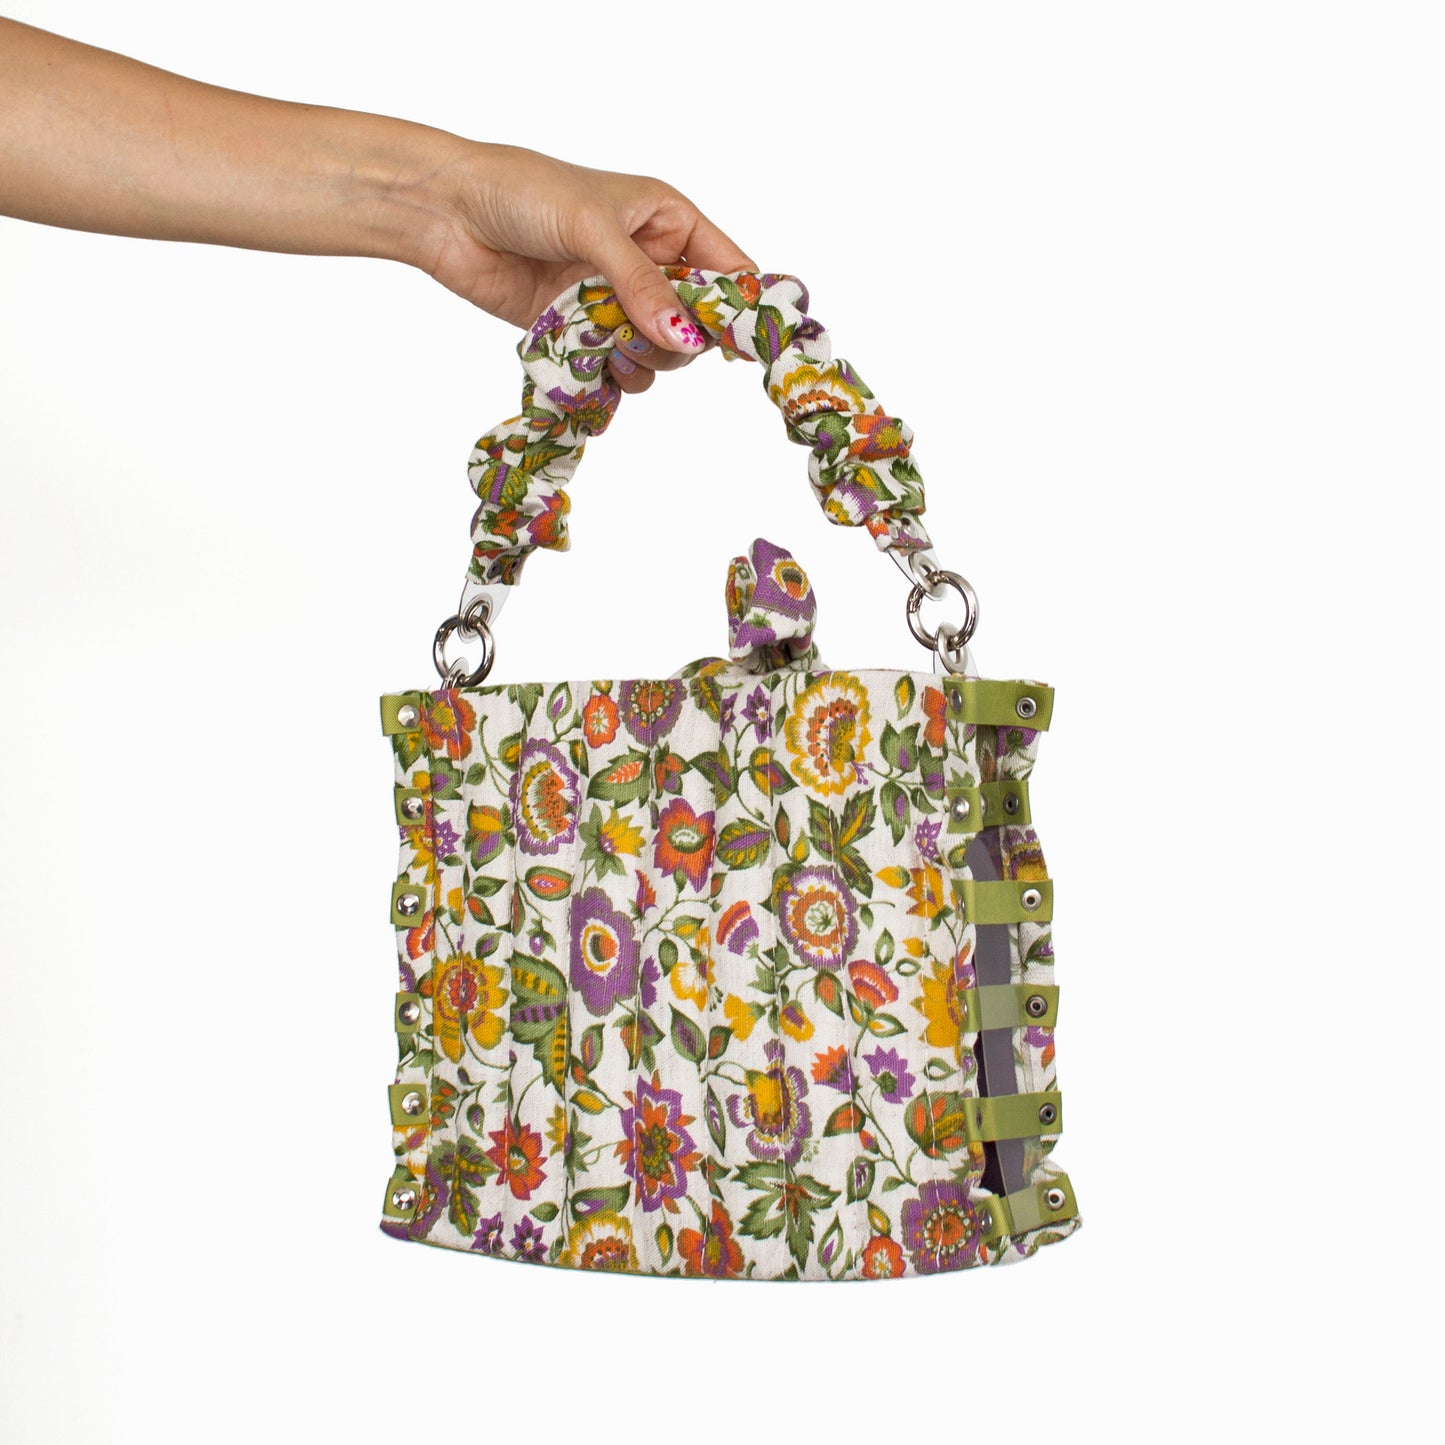 "FLOWERS" Handbag